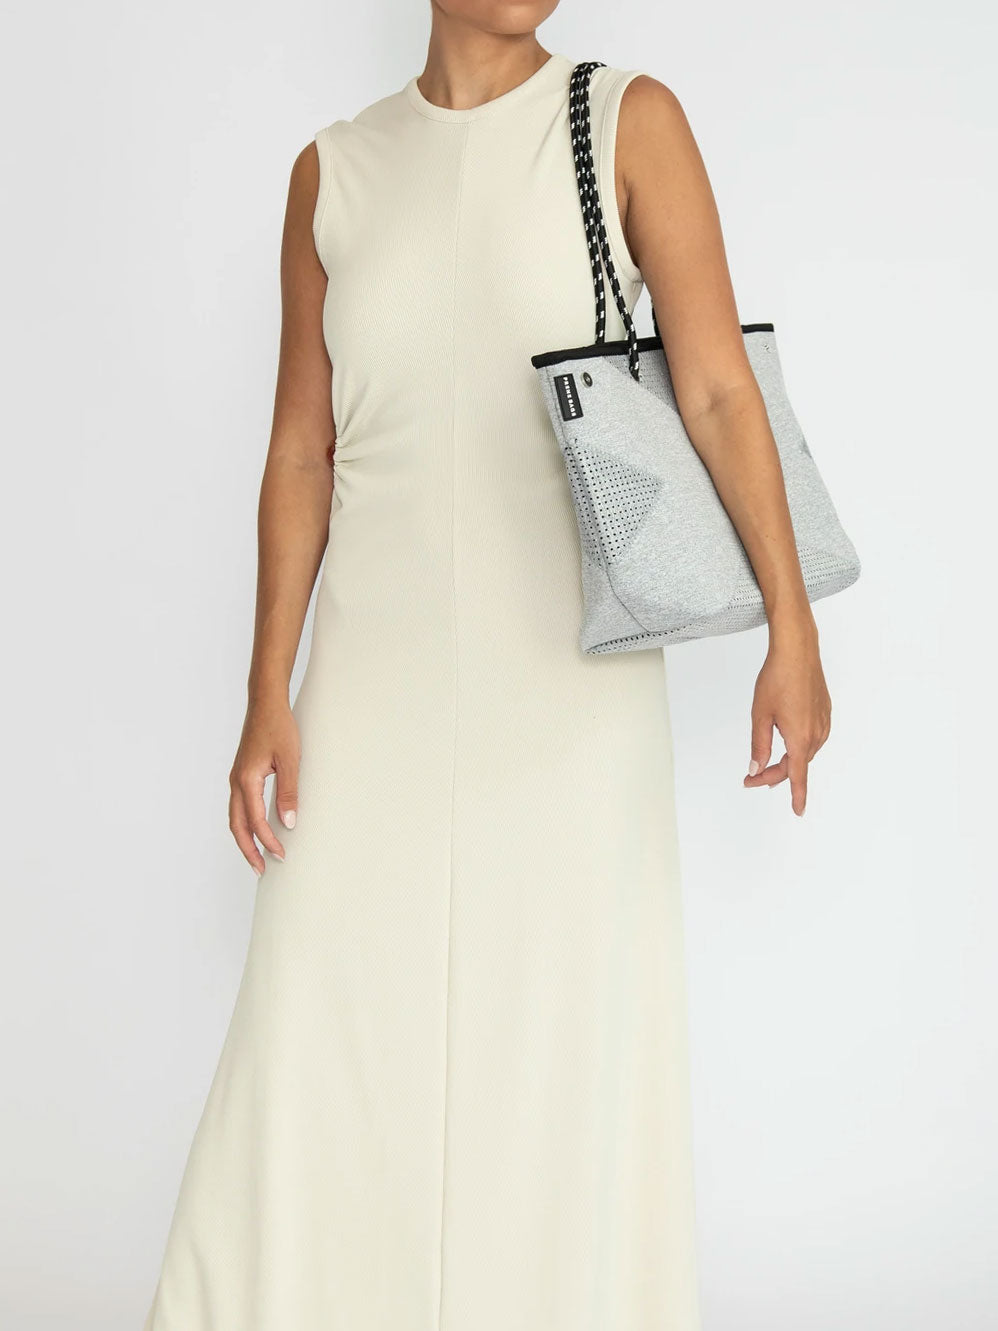 PRENE BAG NEOPRENE BUCKET BILLIE BAG | Clothes design, Bags, Fashion